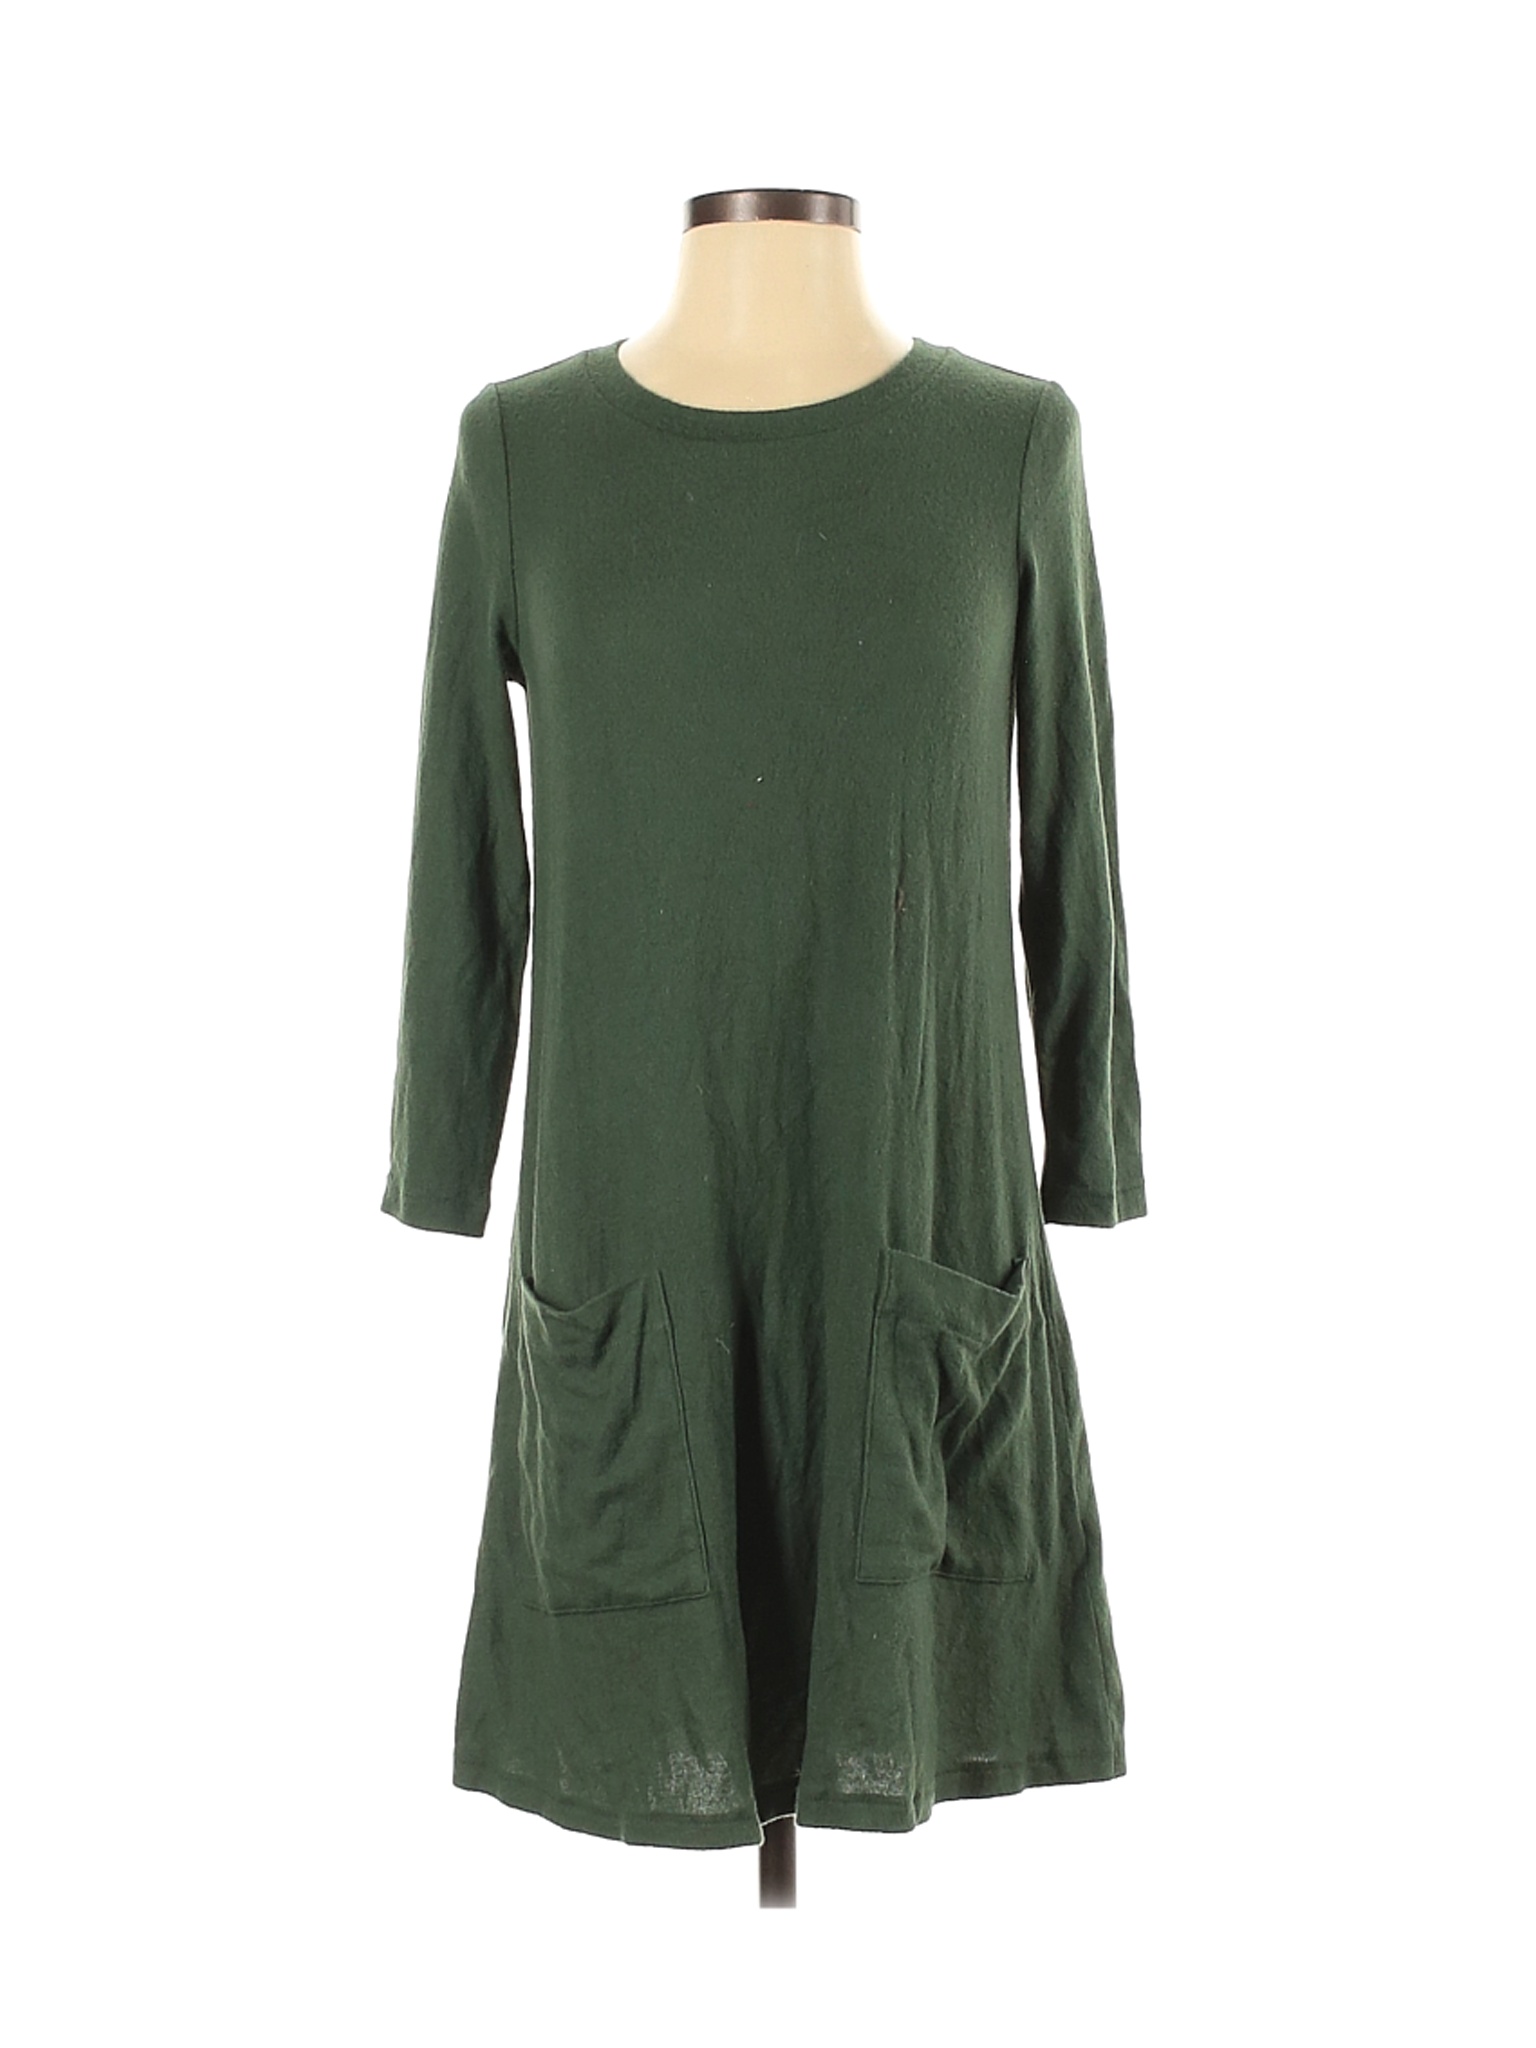 NWT Abercrombie & Fitch Women Green Casual Dress XS | eBay